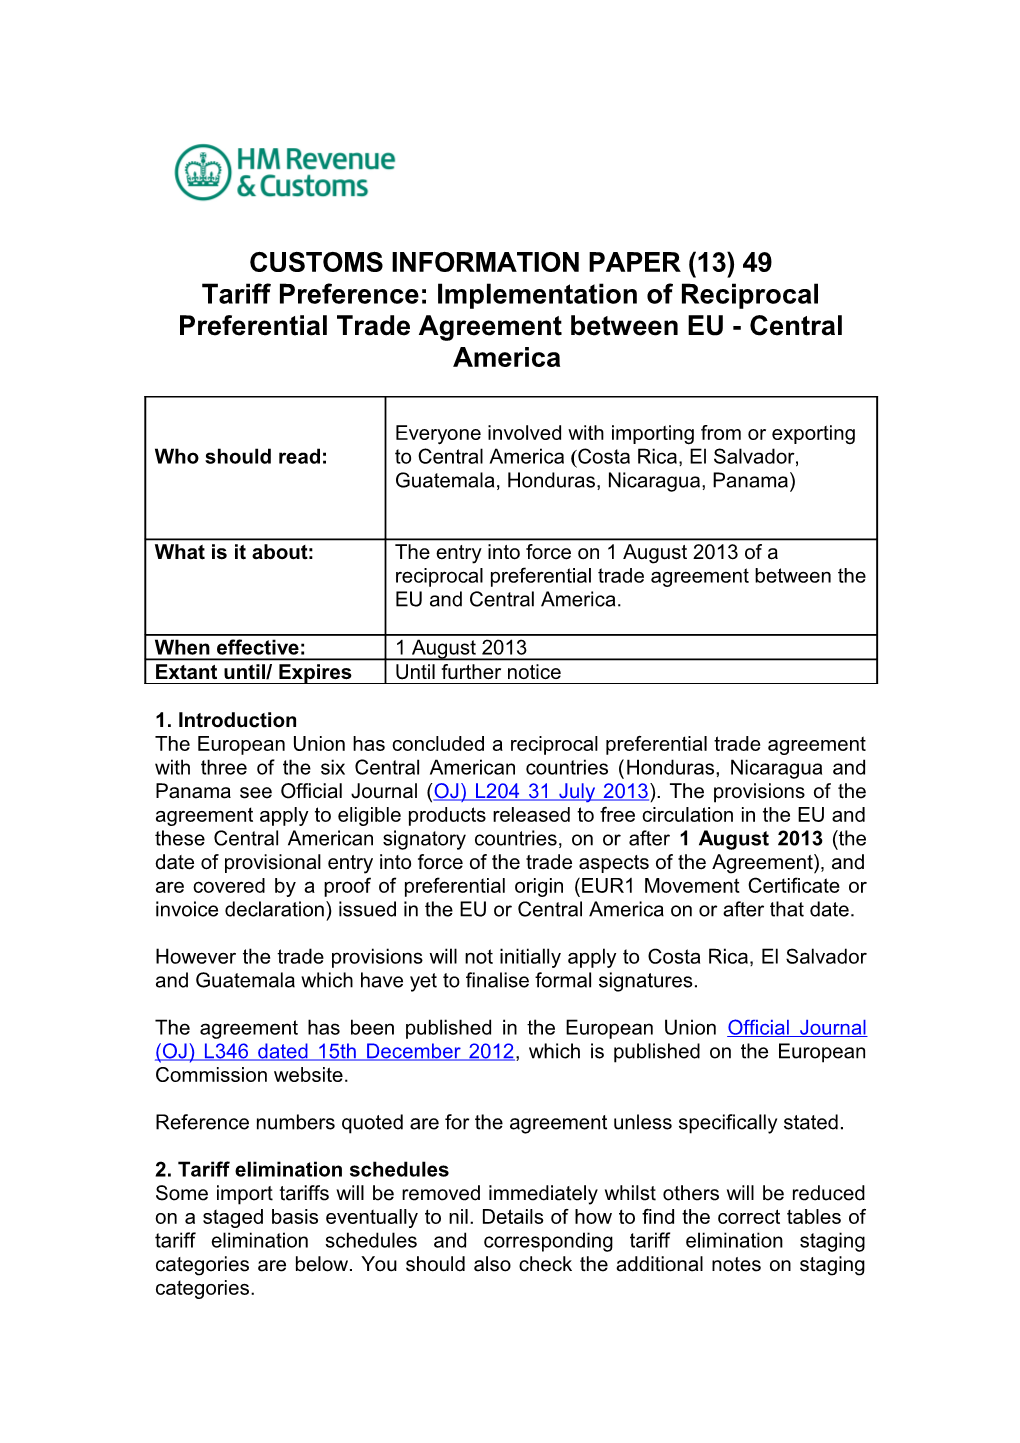 Customs Information Paper (13) 49